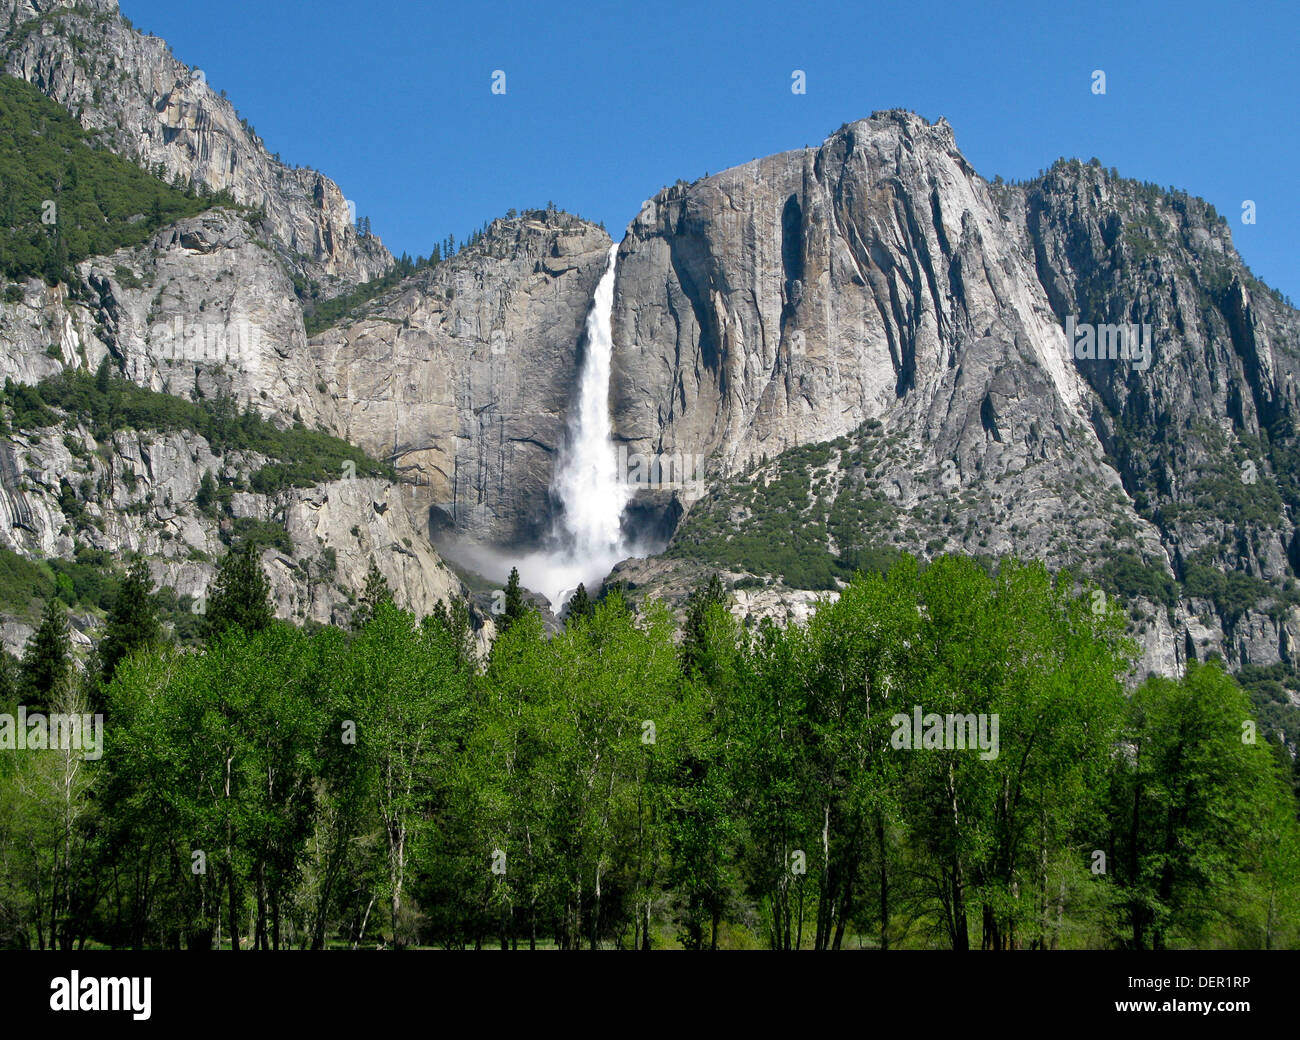 Yosemite Falls in Yosemite National Park, Sierra Nevada, California Stock Photo